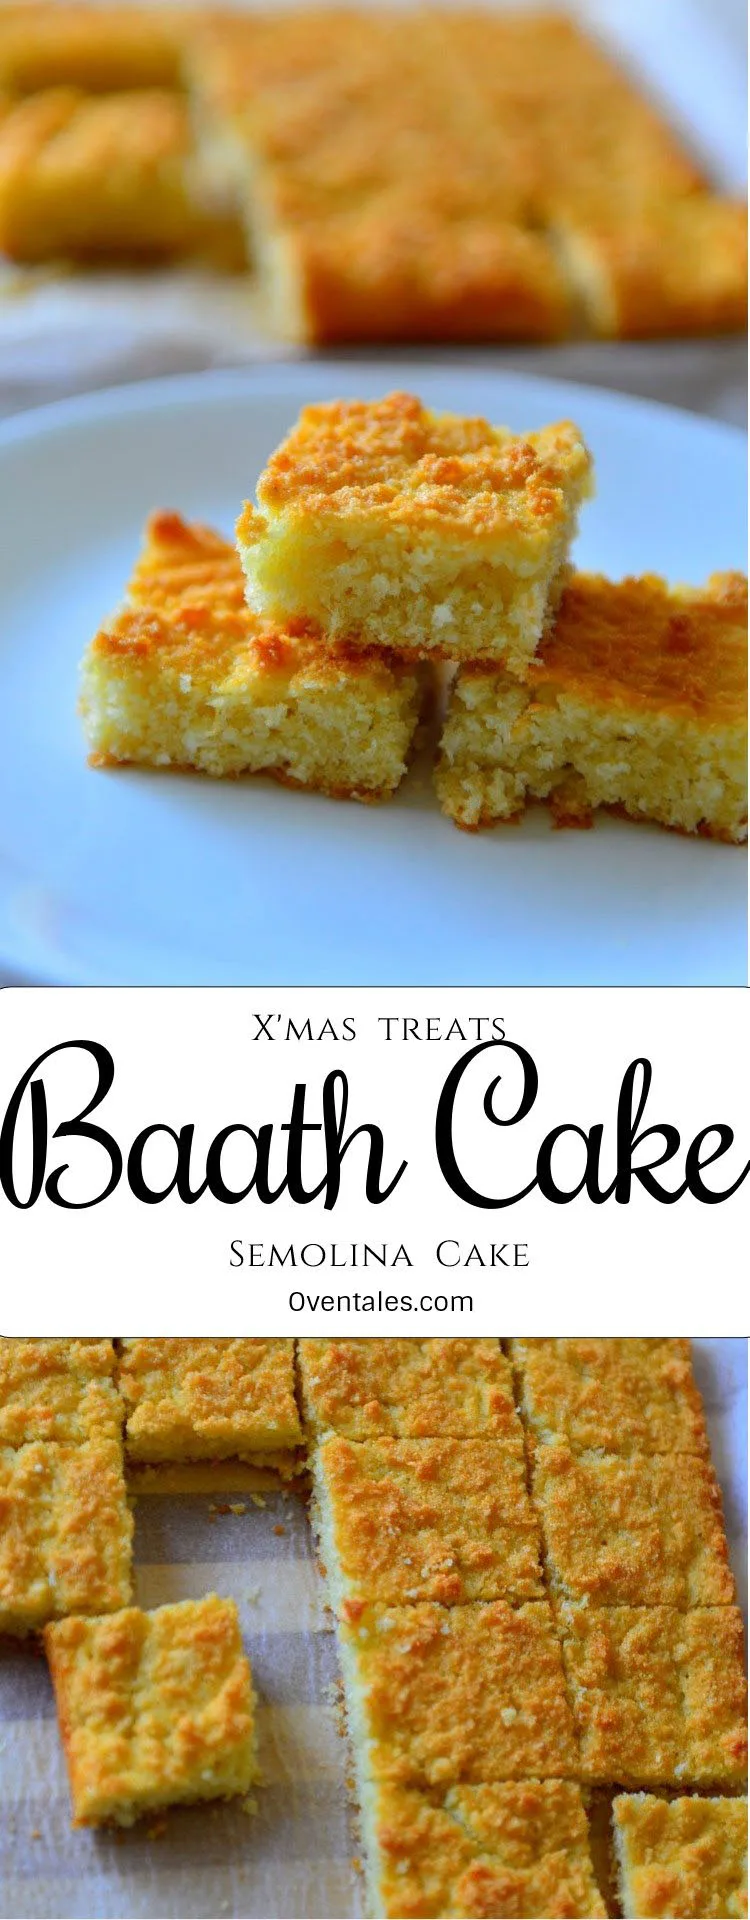 Baath Cake